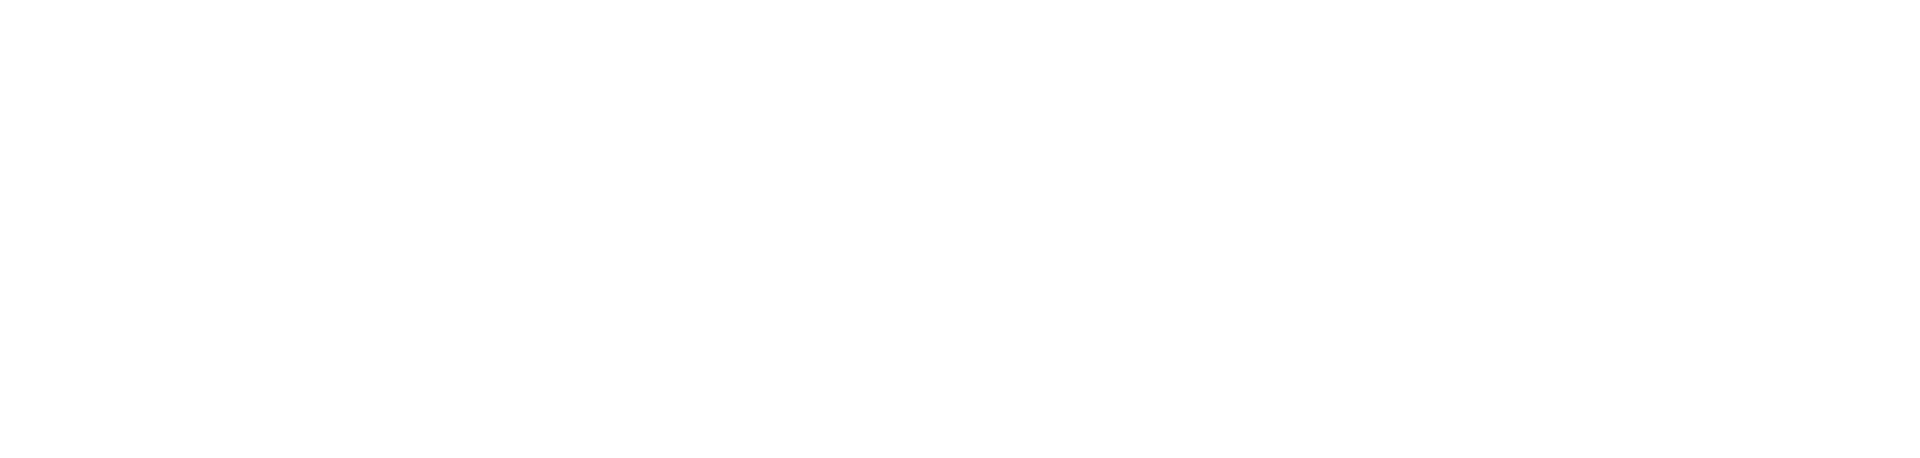 Custom Pavement logo